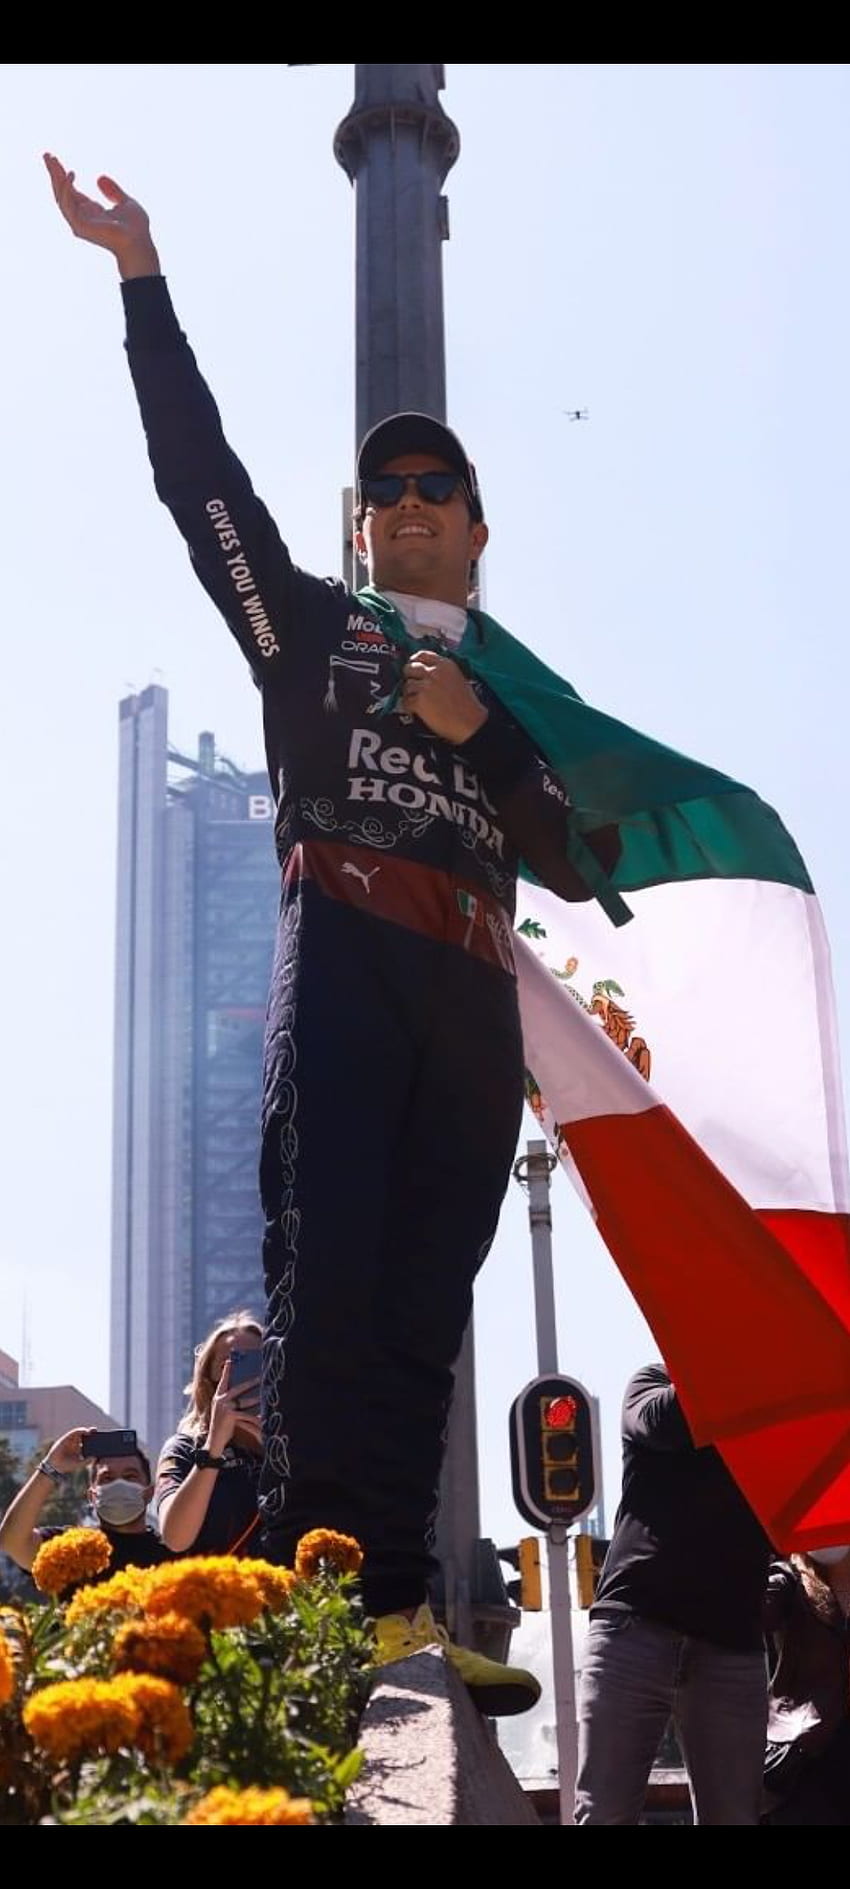 Sergio Pérez | 11, balap redbull, checo kotak kotak, formula 1, sergio perez, SP11, f1, meksiko, redbull, checo wallpaper ponsel HD